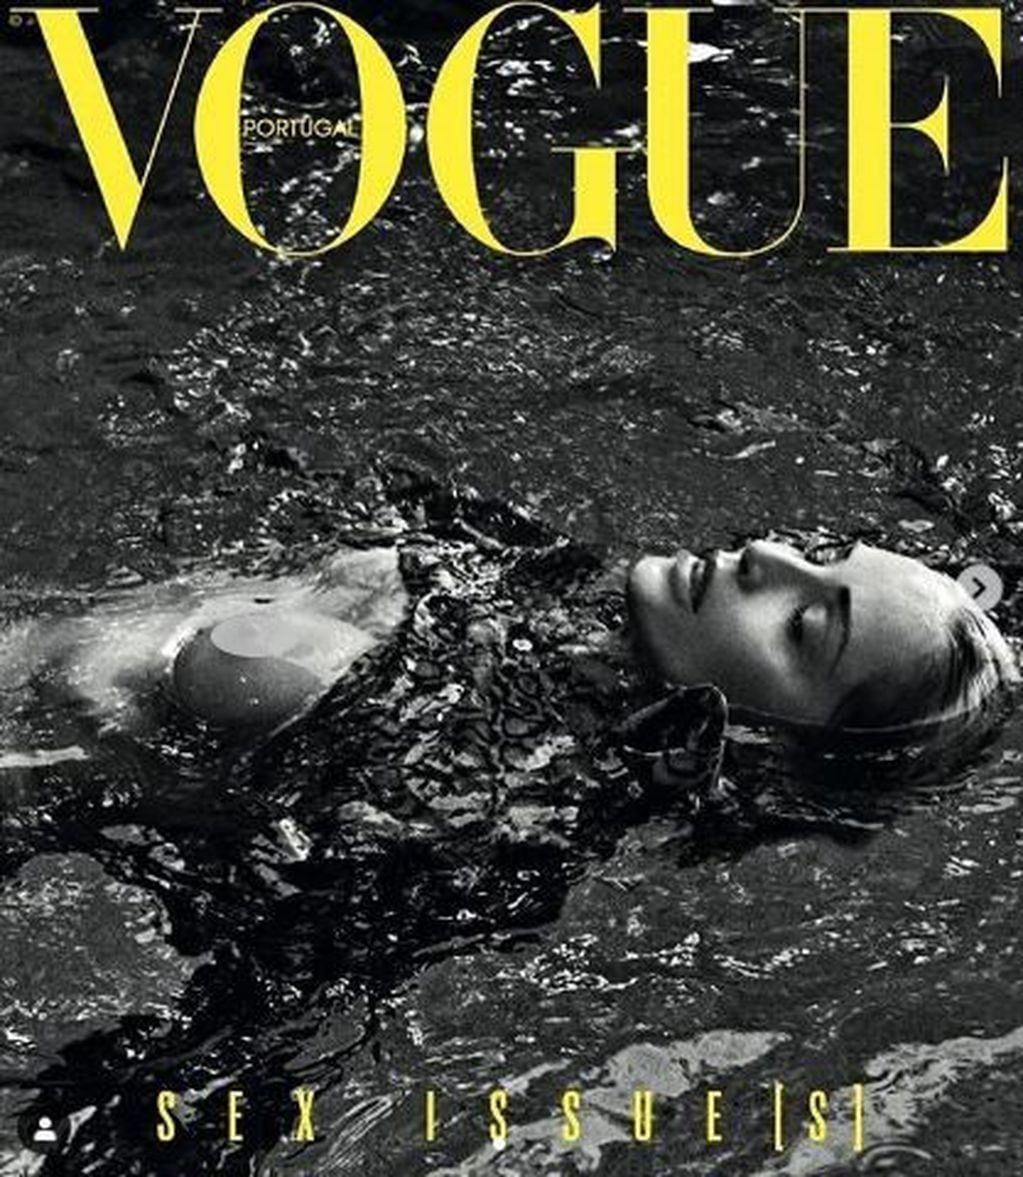 La tapa de Sharon Stone para Vogue Portugal (Fuente: Instagram/sharonstone)